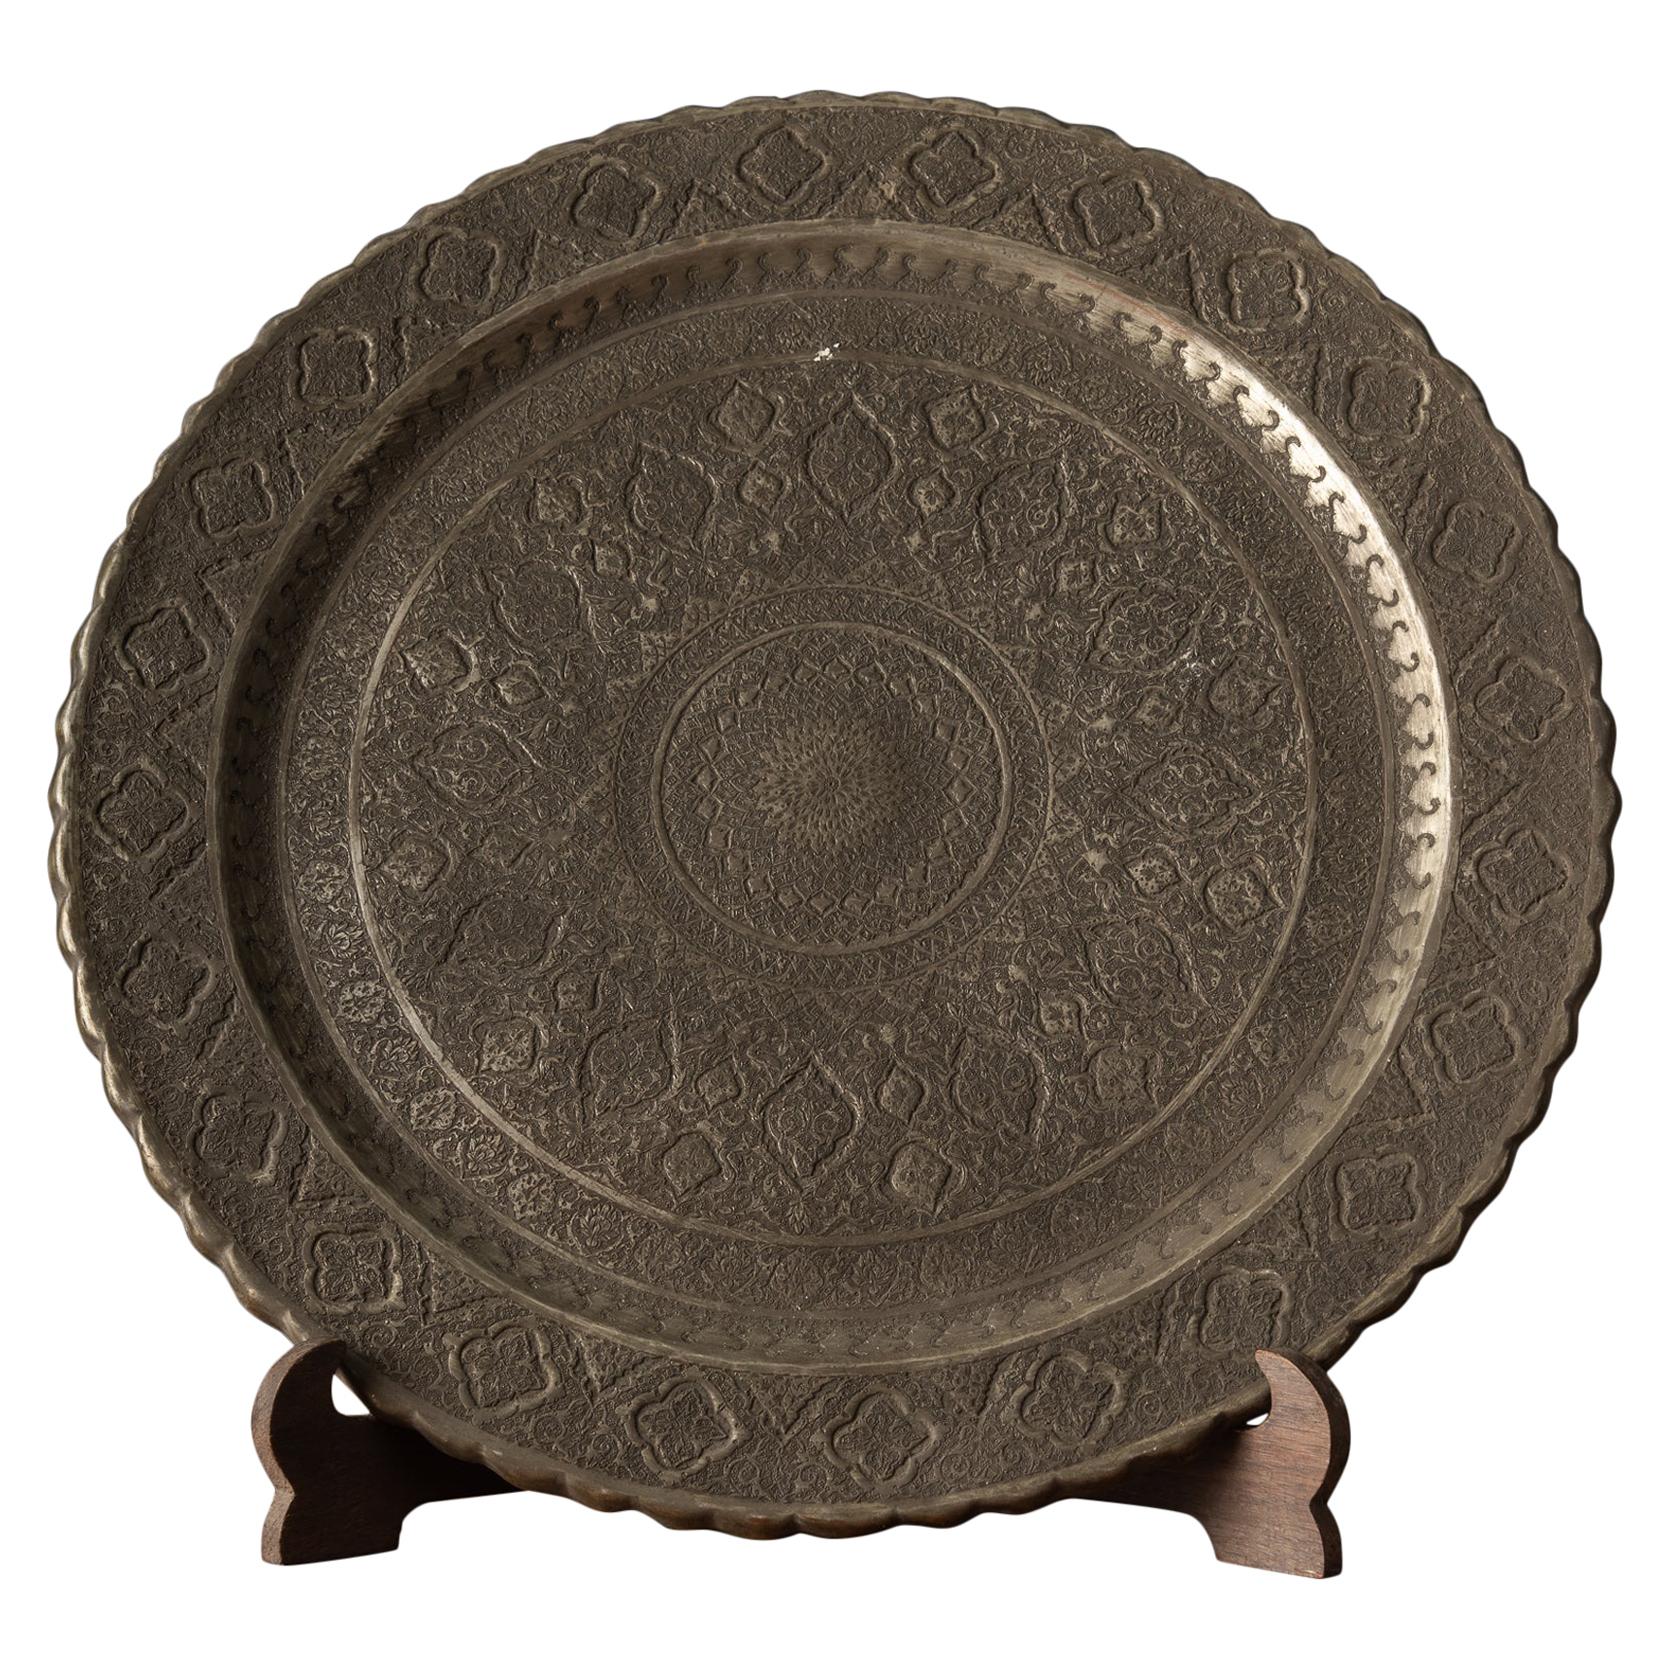 Rare Decorative Plate with an Elegant Design